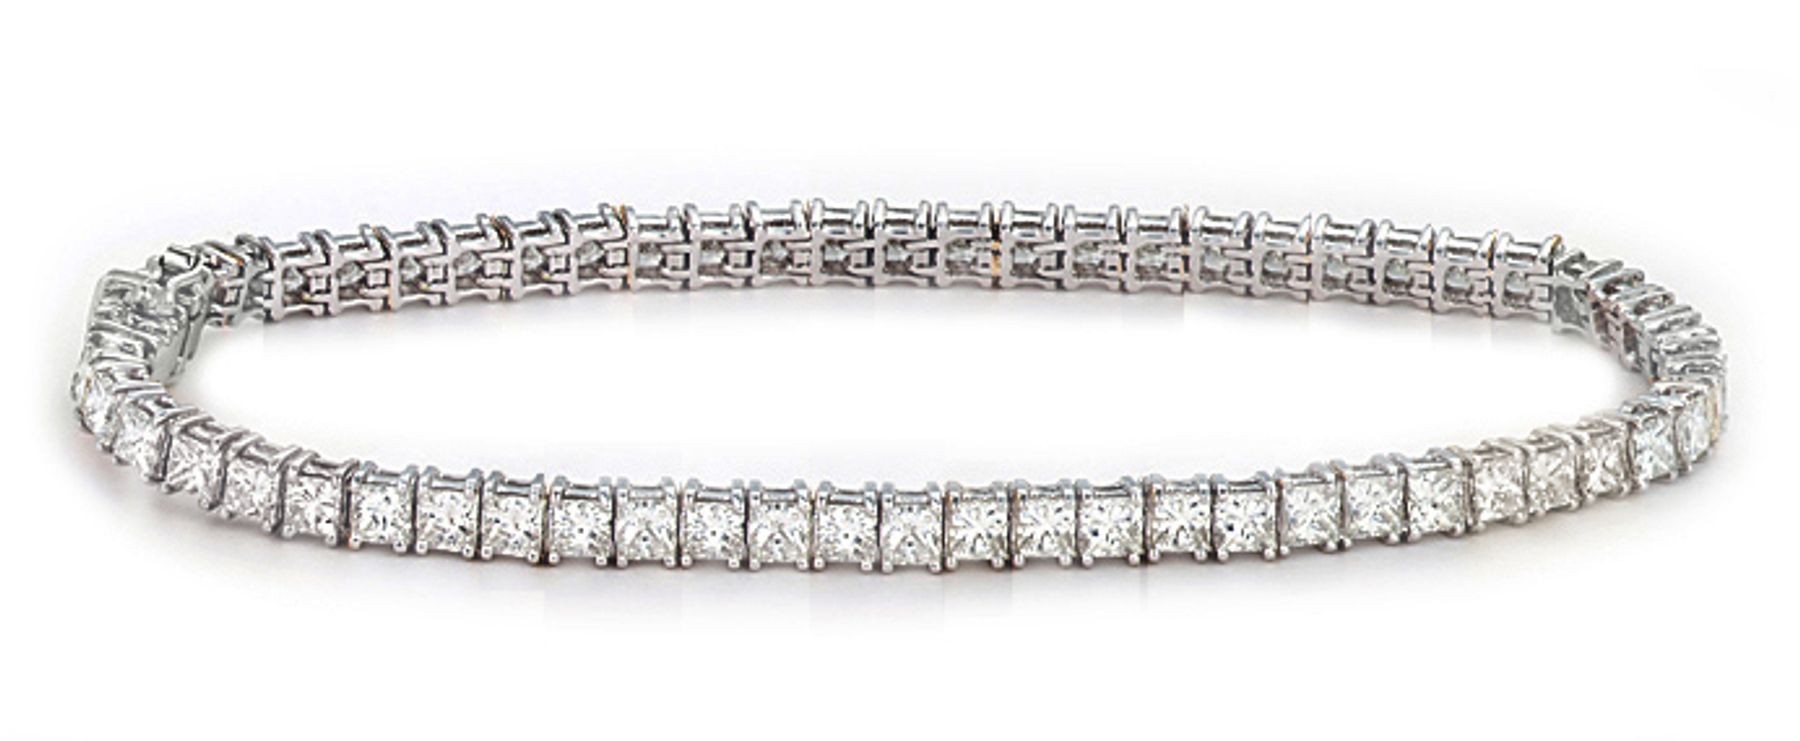 View Diamond Bracelets | Diamond Grading